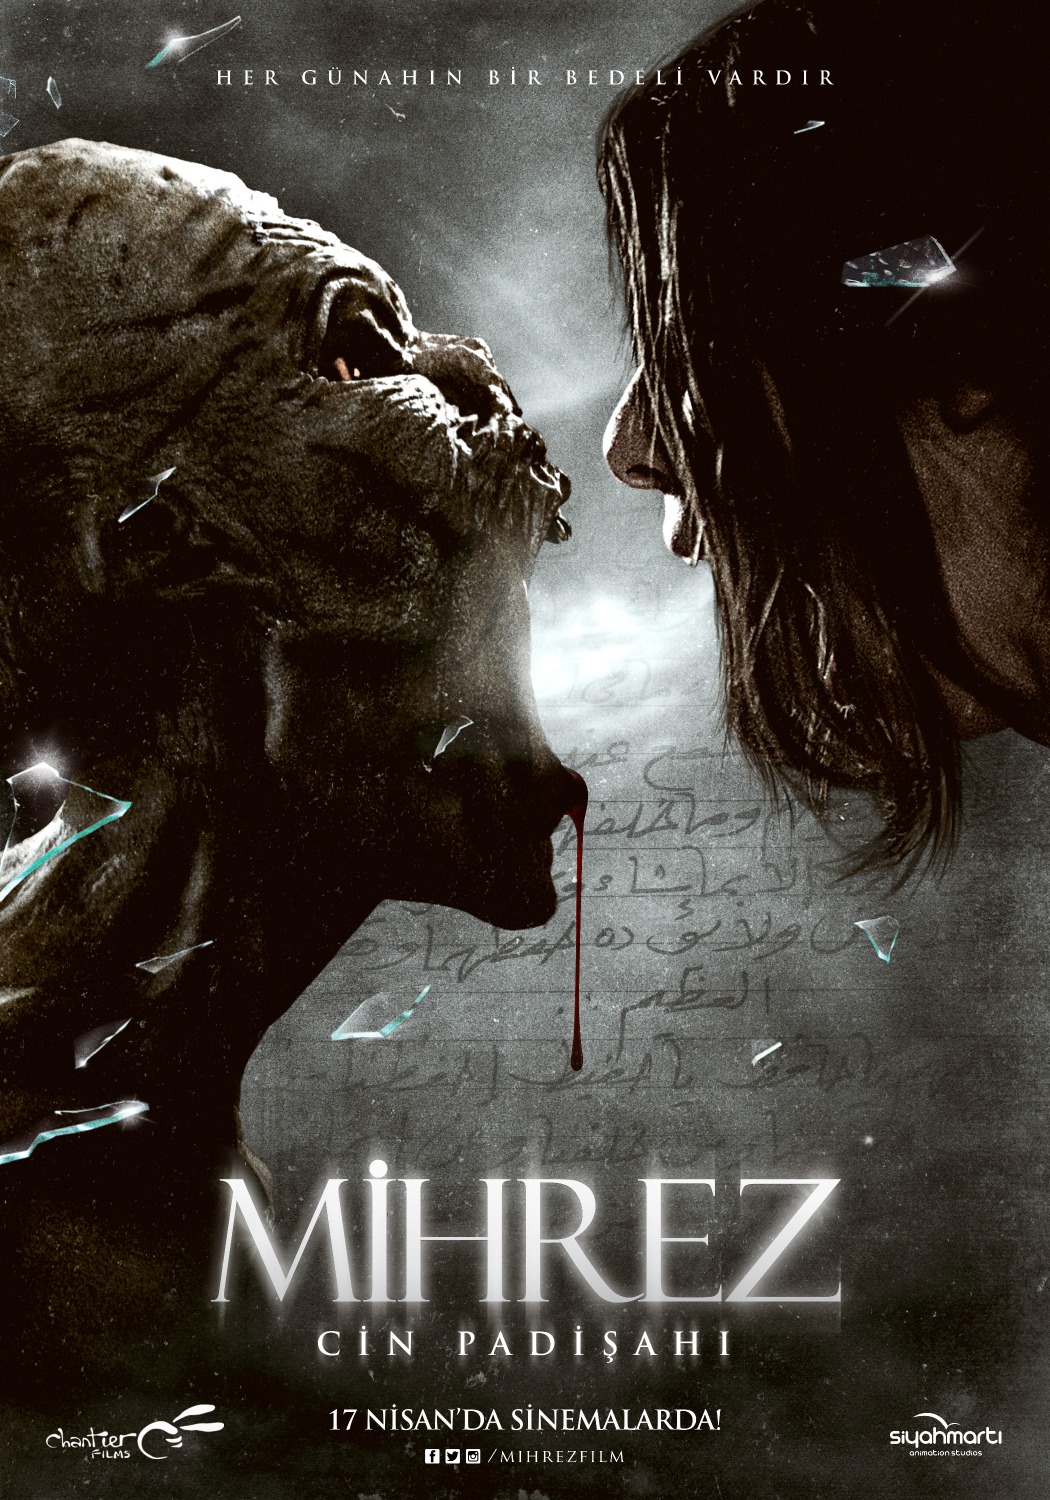 Extra Large Movie Poster Image for Mihrez: Cin Padisahi (#1 of 2)